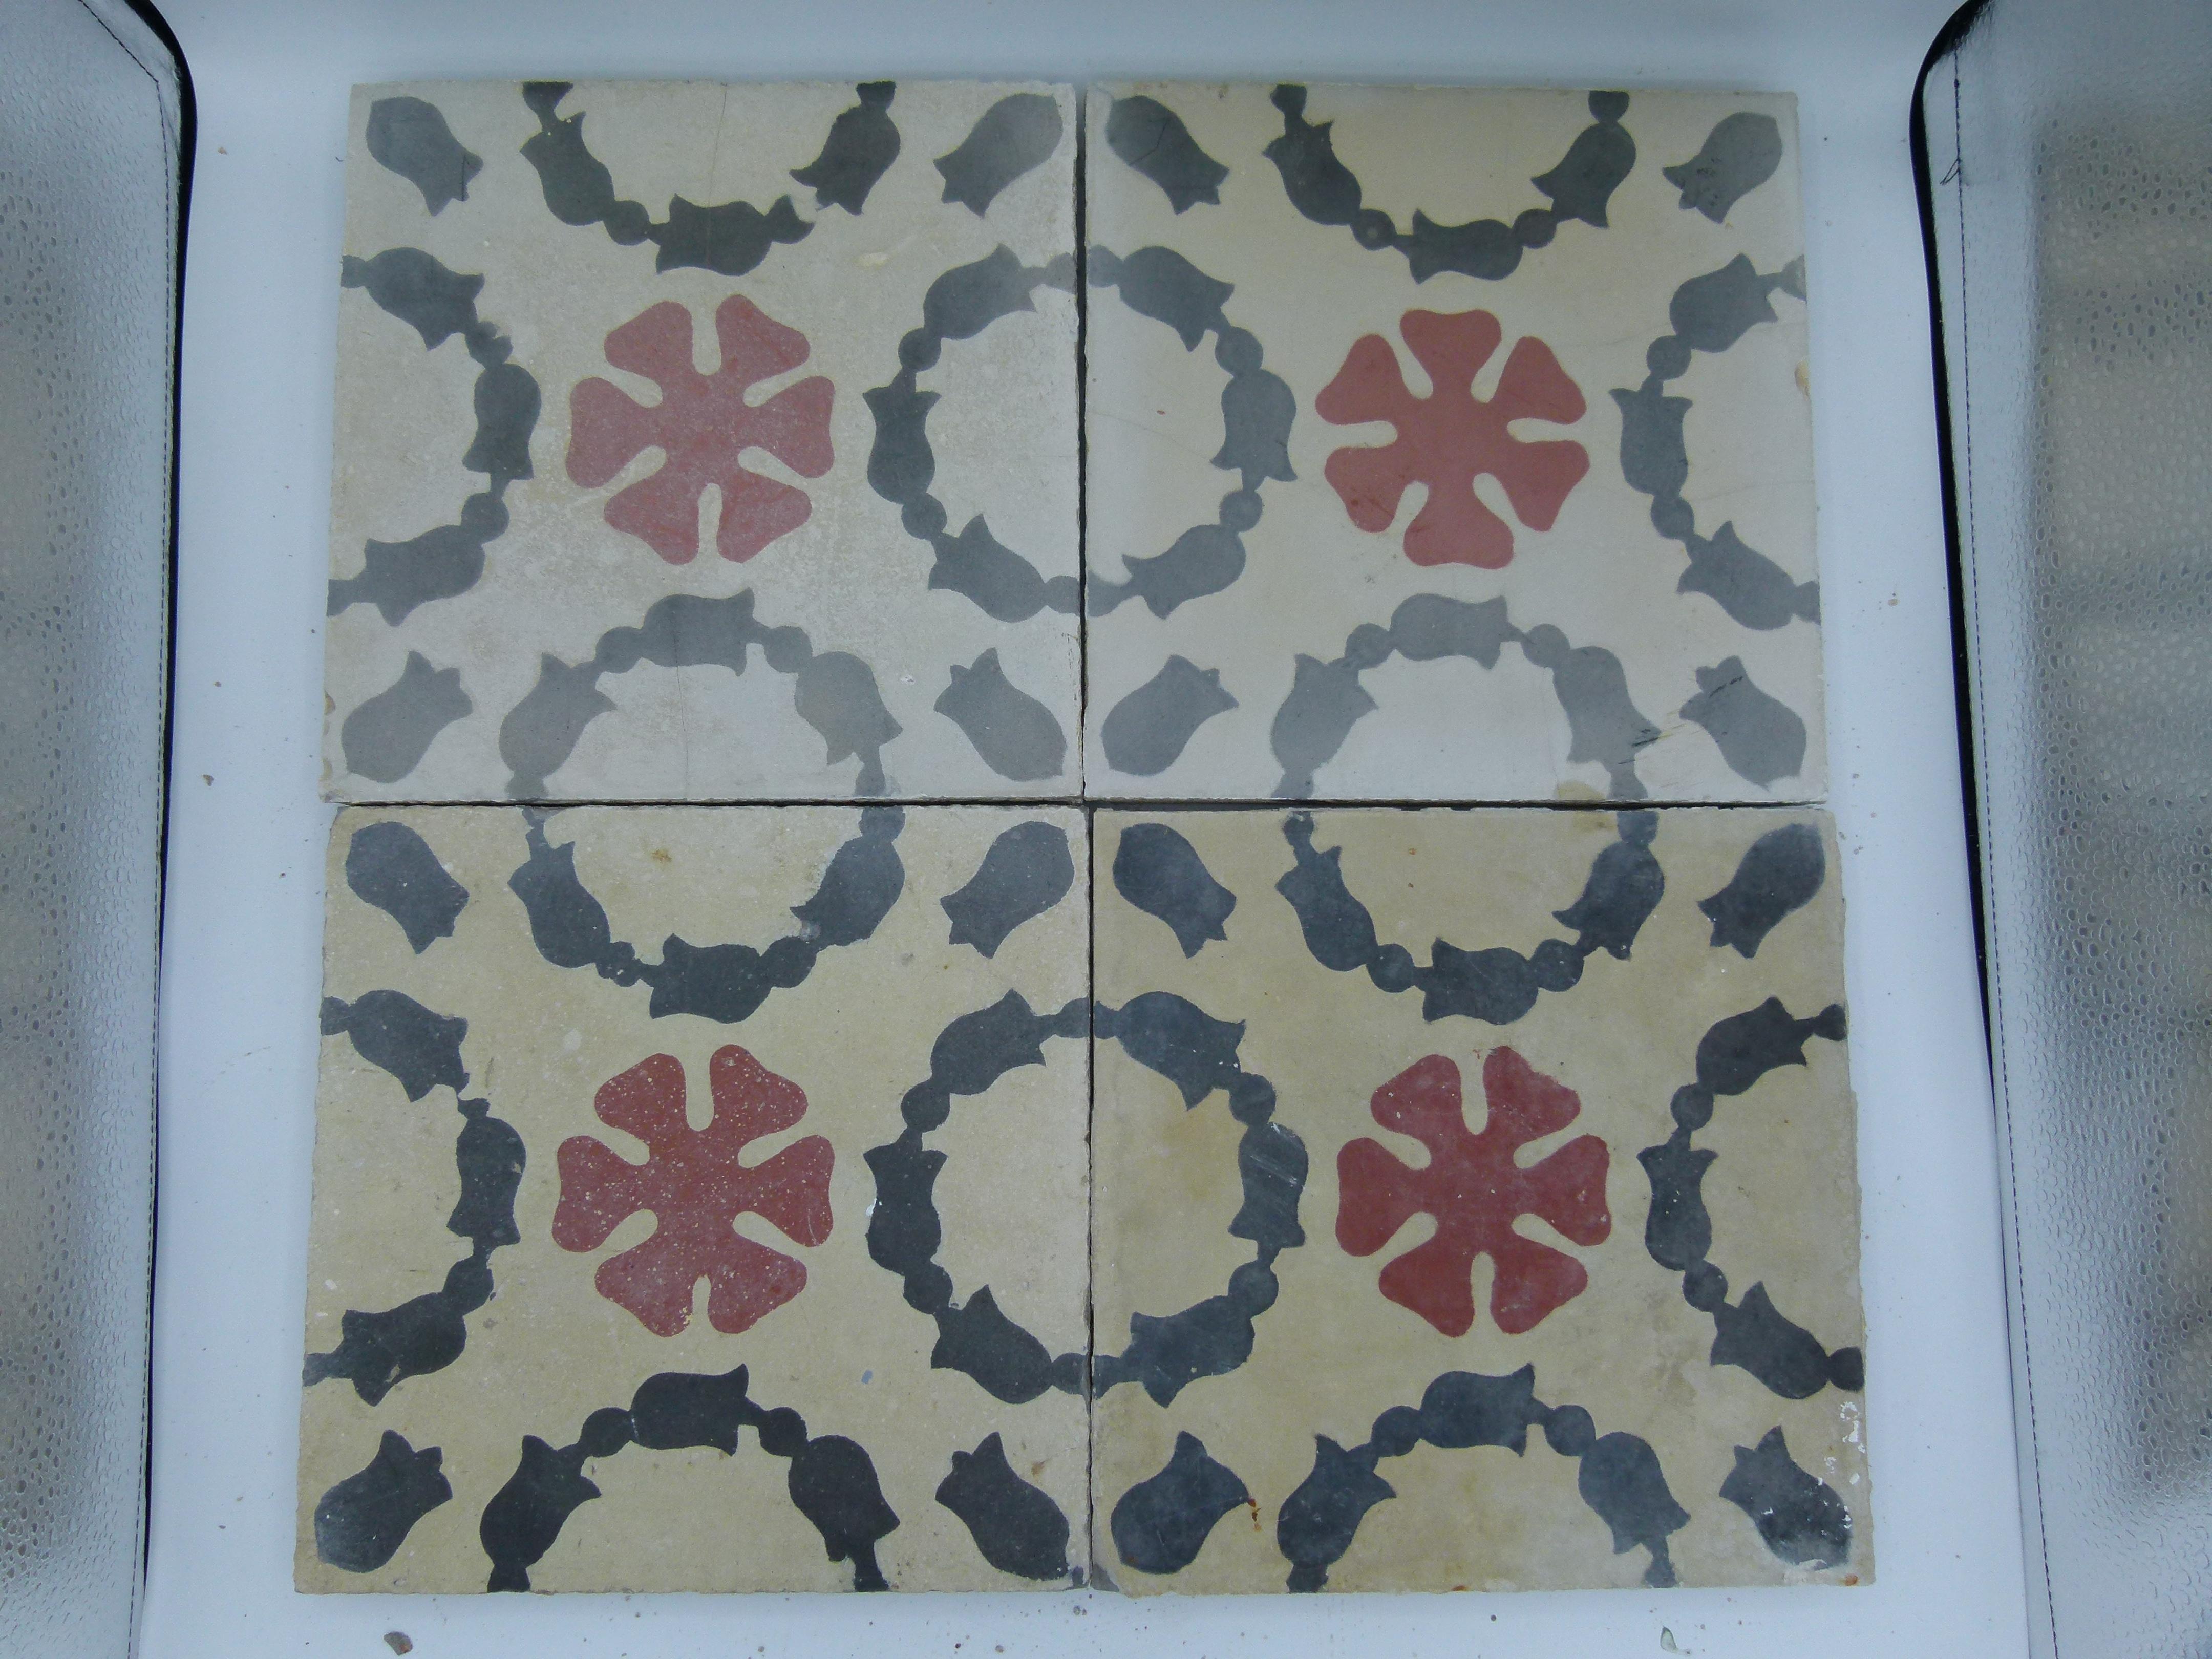 Eraly 20th Century Hydraulic Spanish Art Nouveau Tiles 2